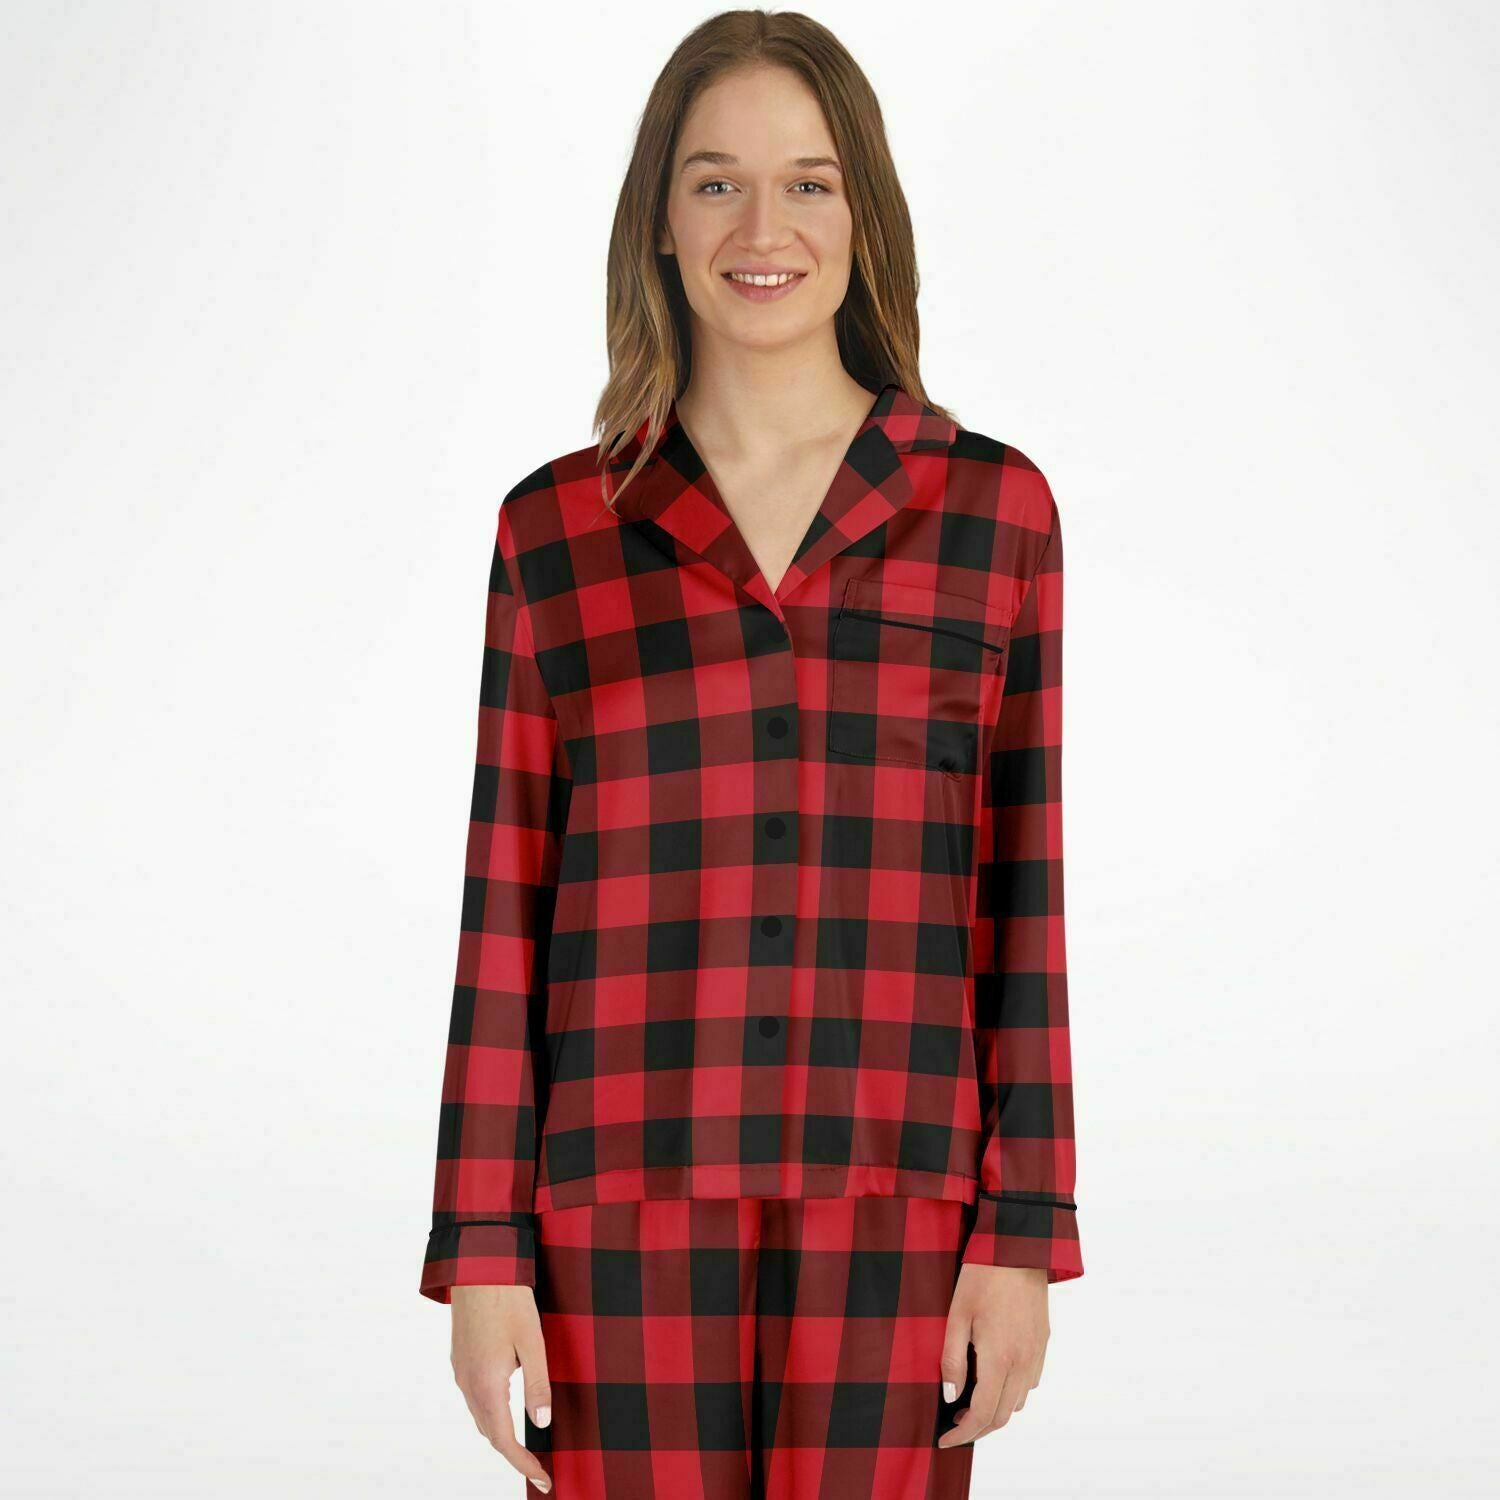 Buffalo Plaid Satin Women Pajama Set, Red Black Check Christmas